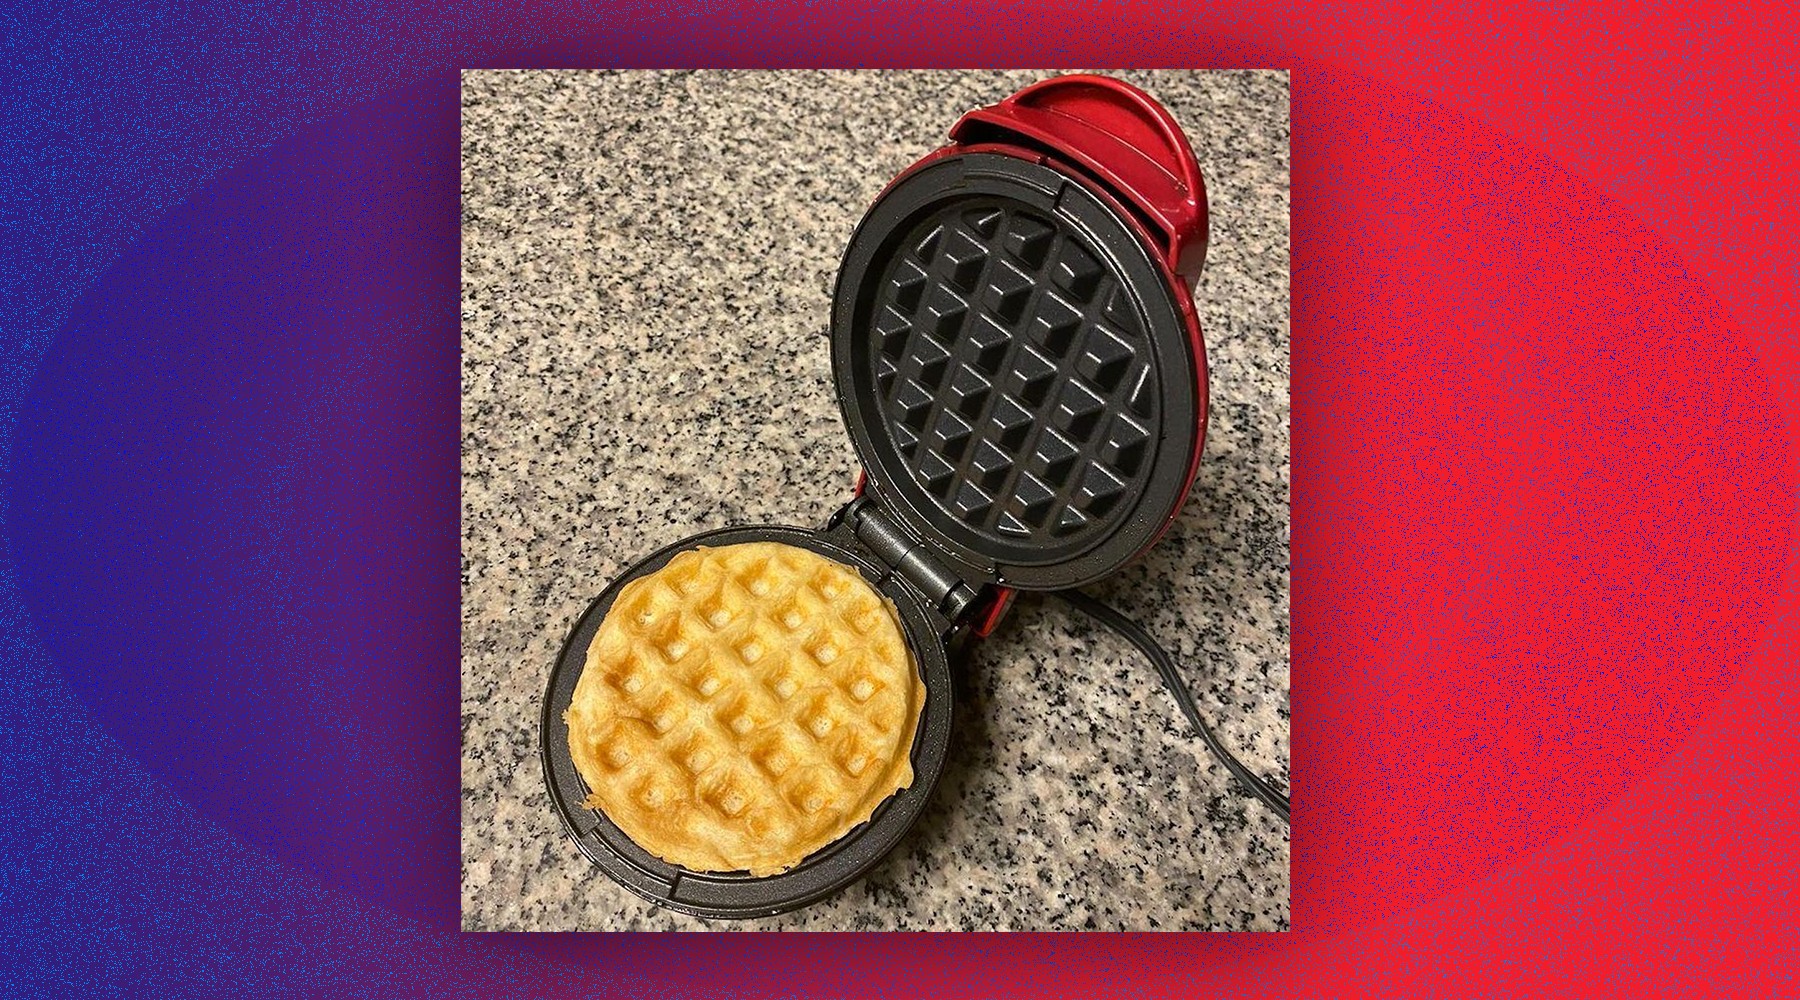 DASH Mini Waffle Maker In-depth Review